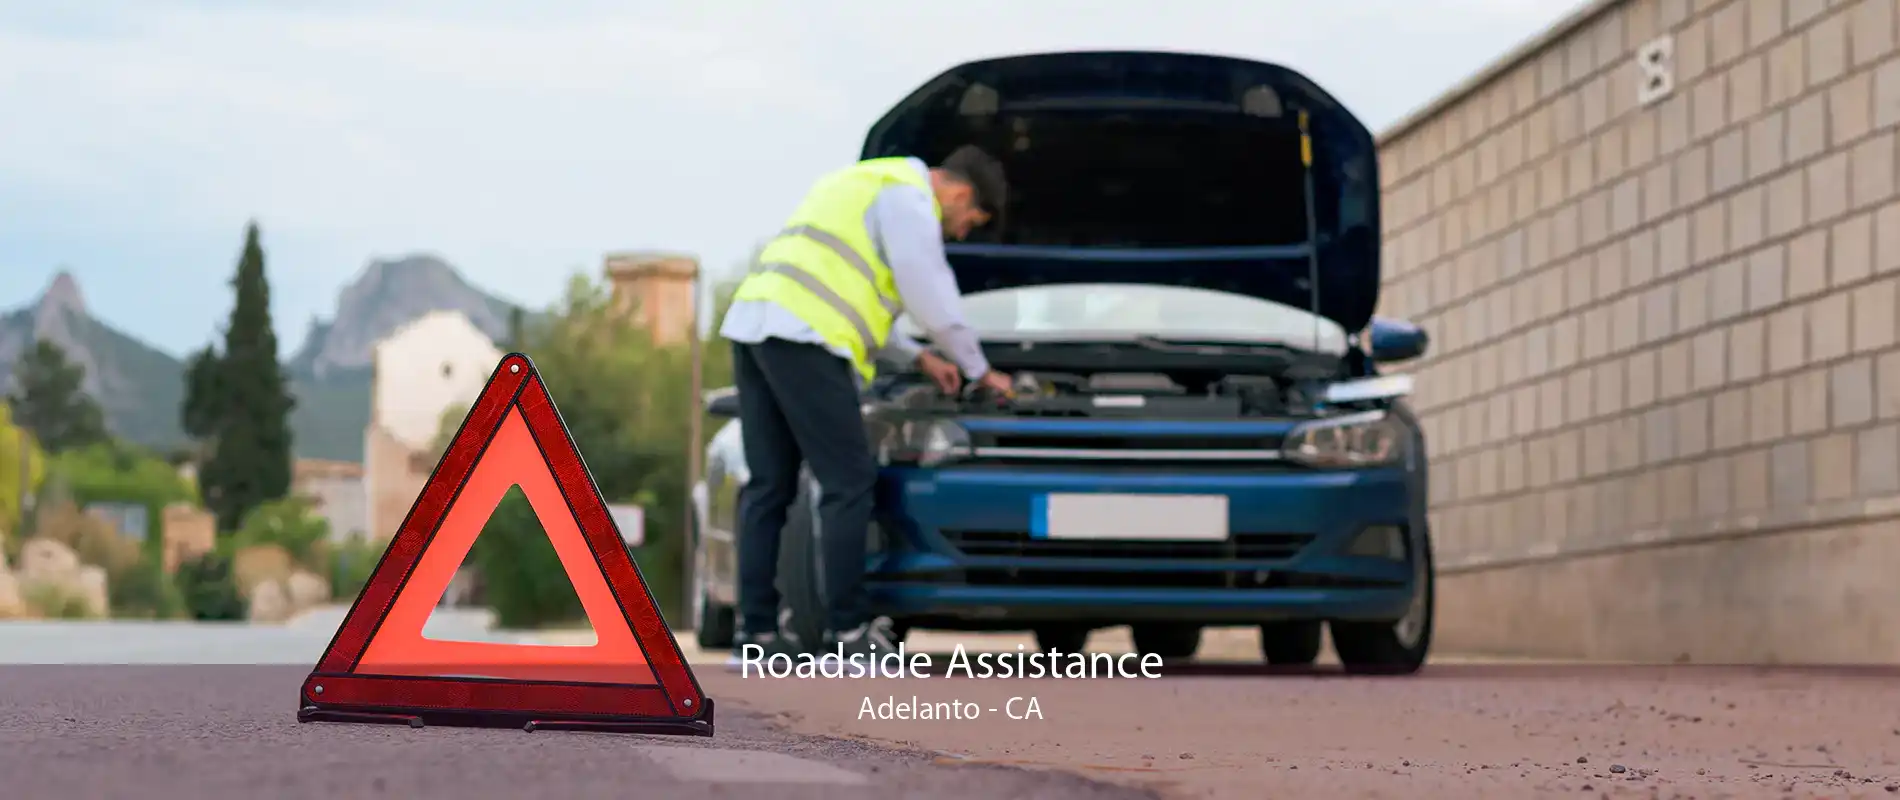 Roadside Assistance Adelanto - CA